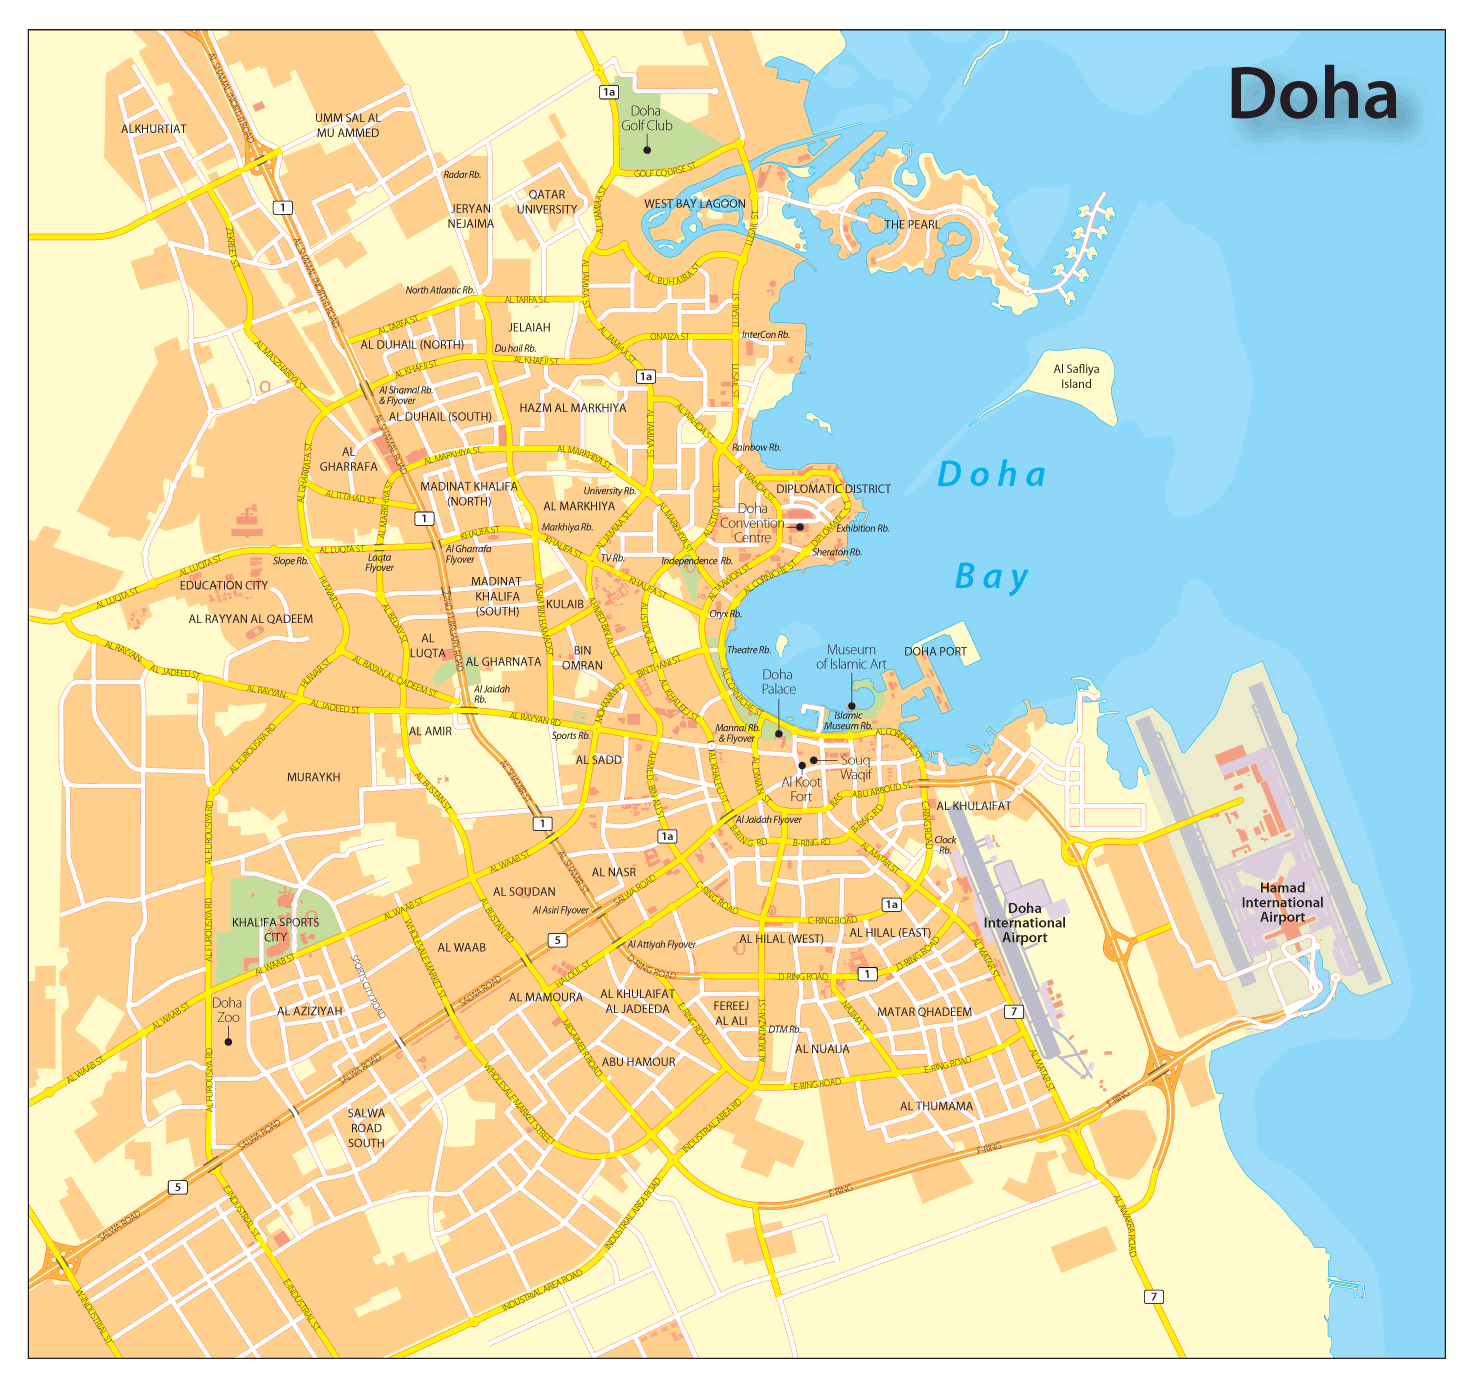 Qatar - Doha - maps